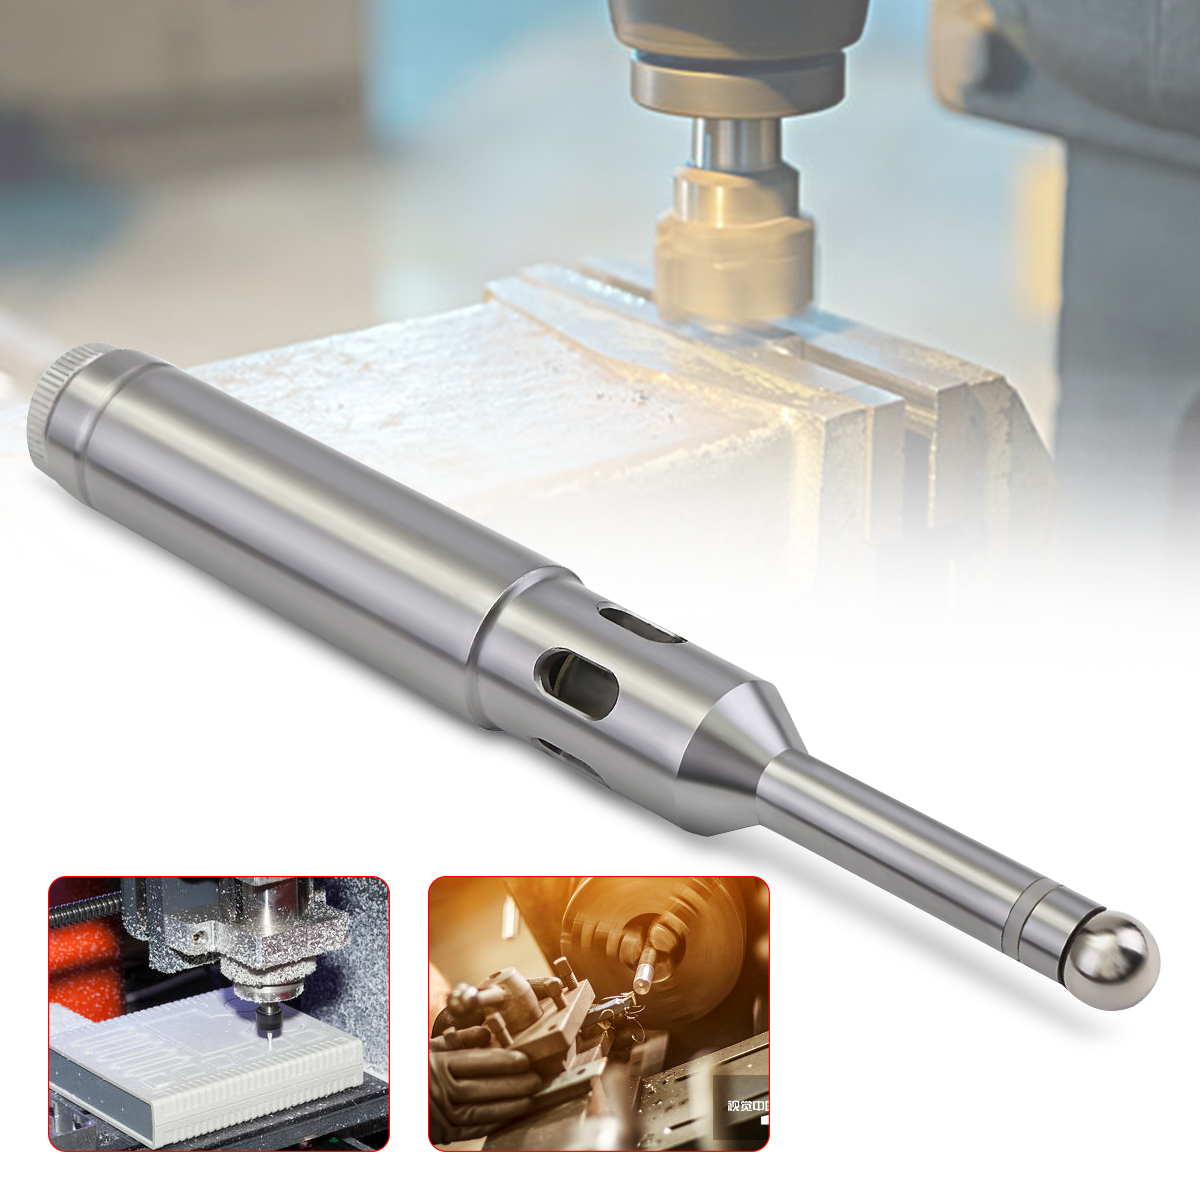 Precision-Electronic-Edge-Finder-Sensor-Beep-LED-Milling-For-CNC-Lathe-Machining-Tool-1419816